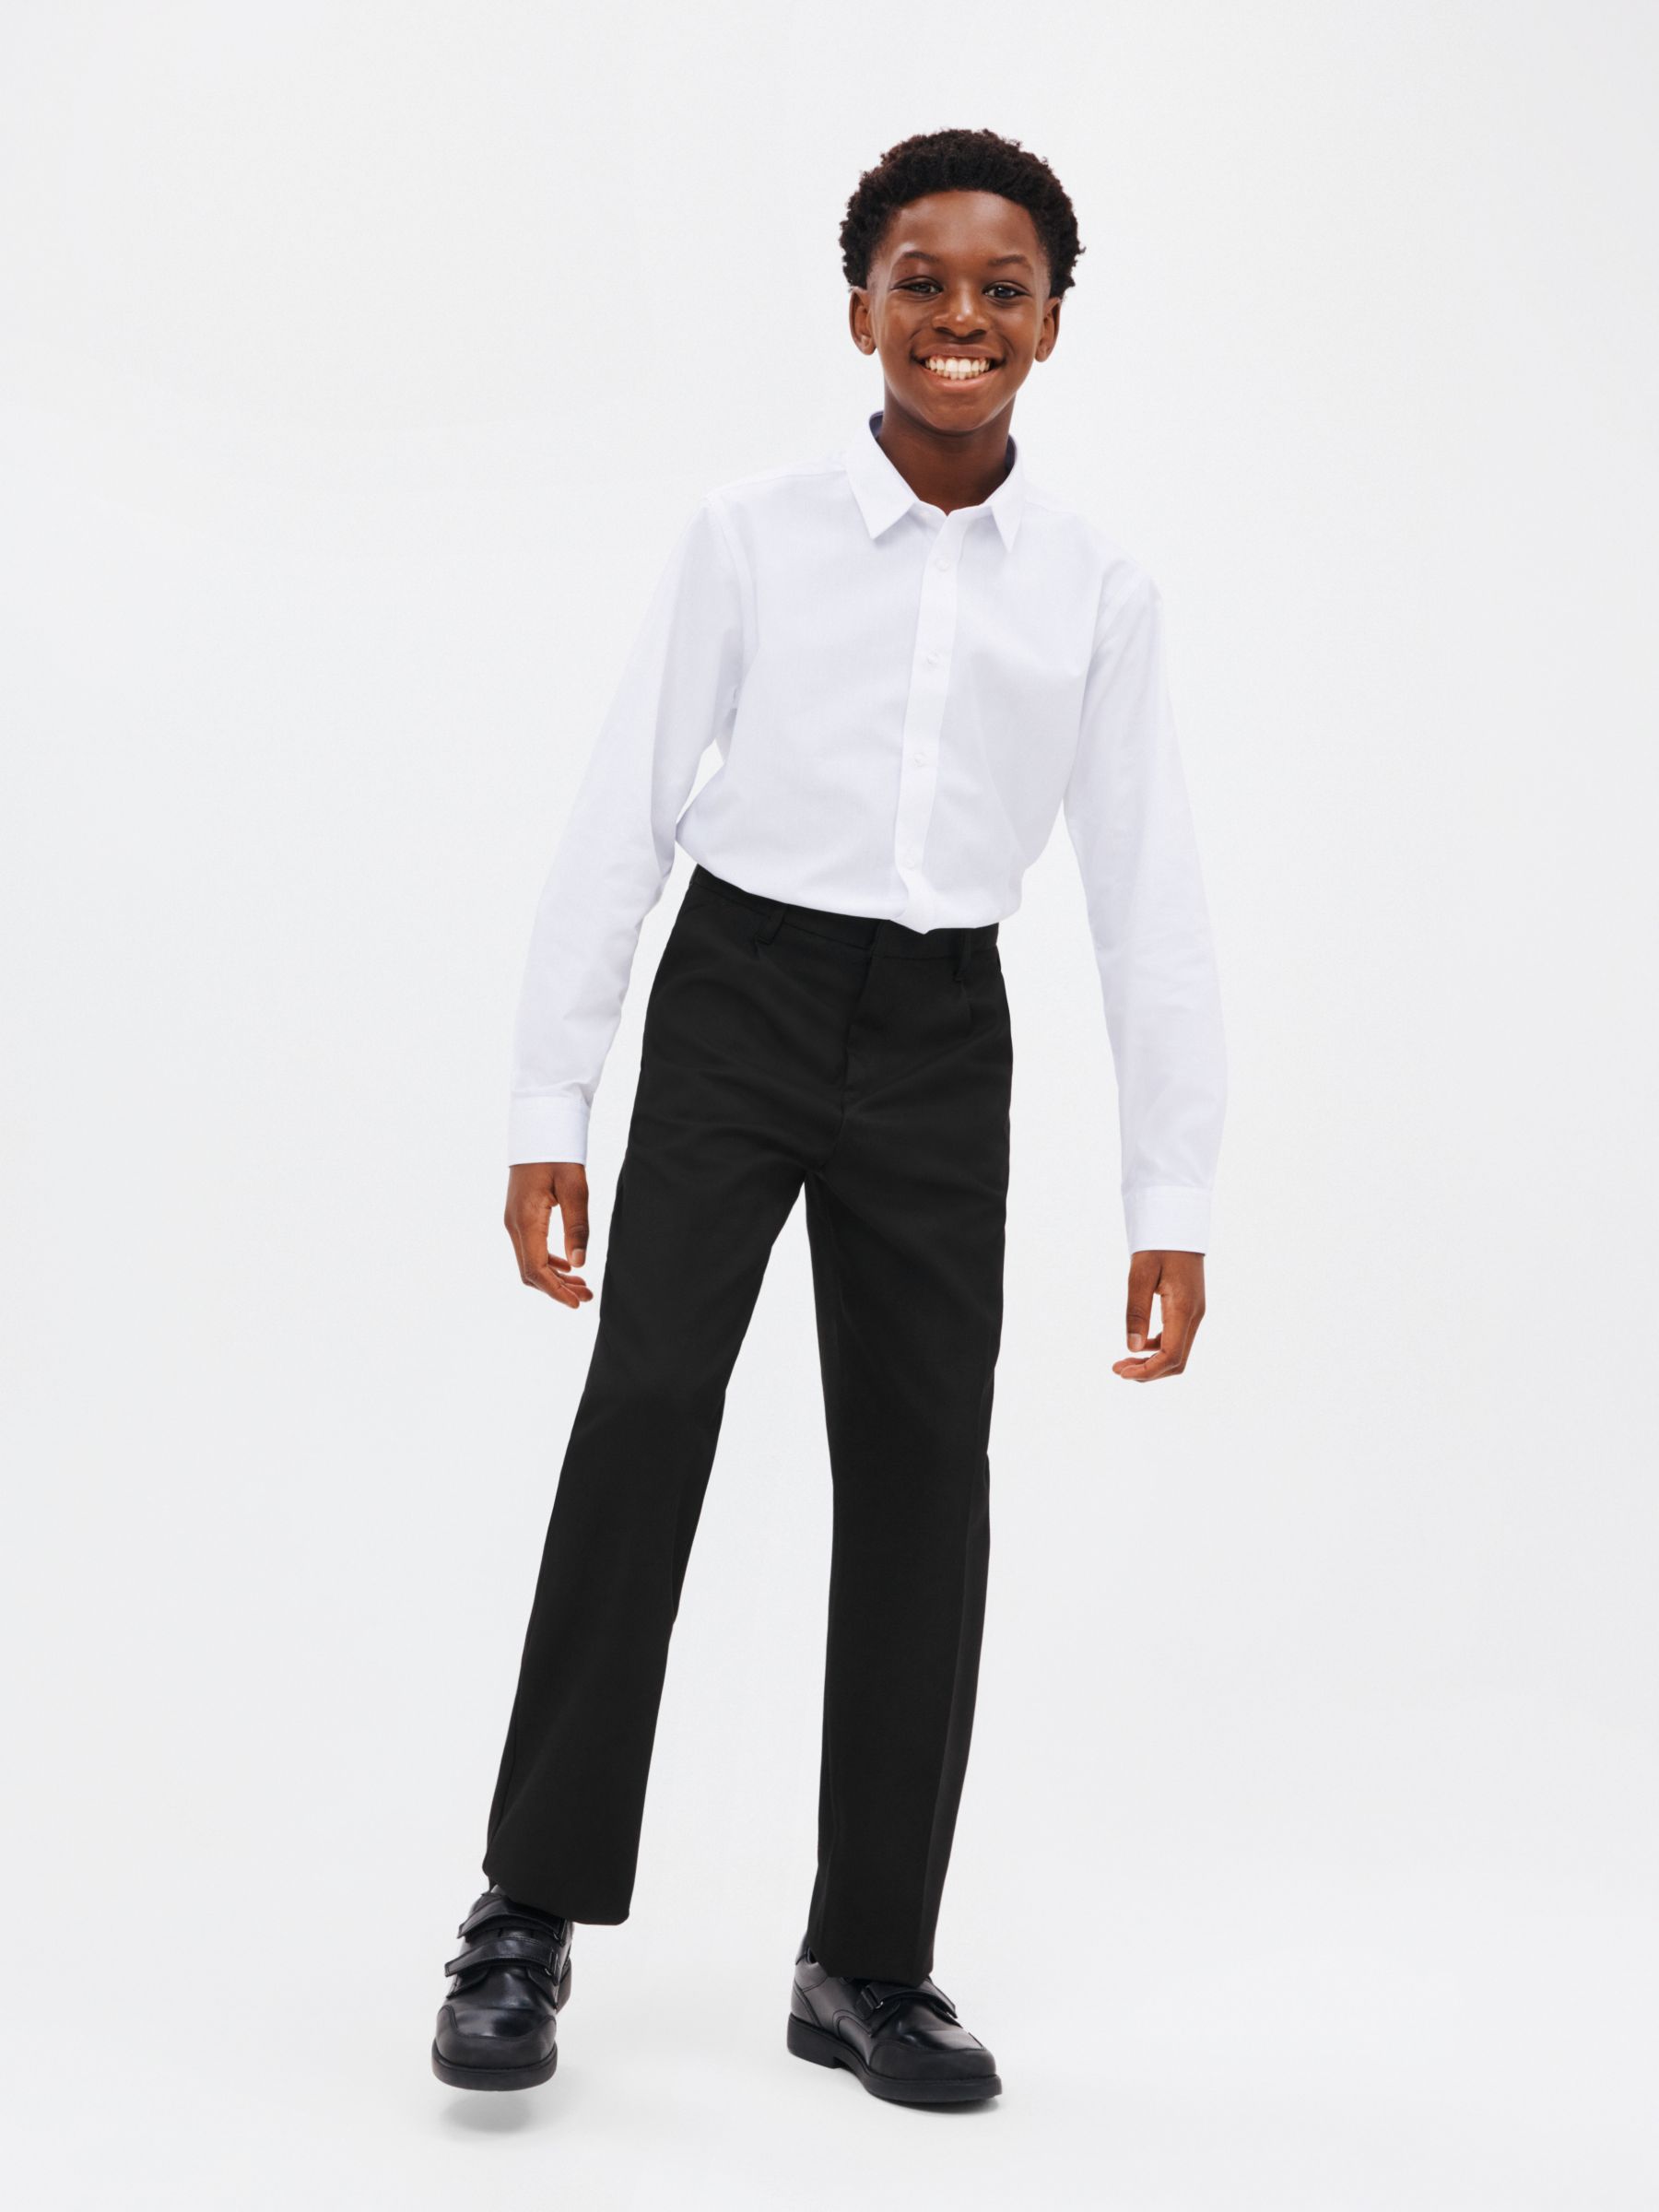 Girls Black Smart Trousers Women Tailored School Office Work Formal  Straight Fit 